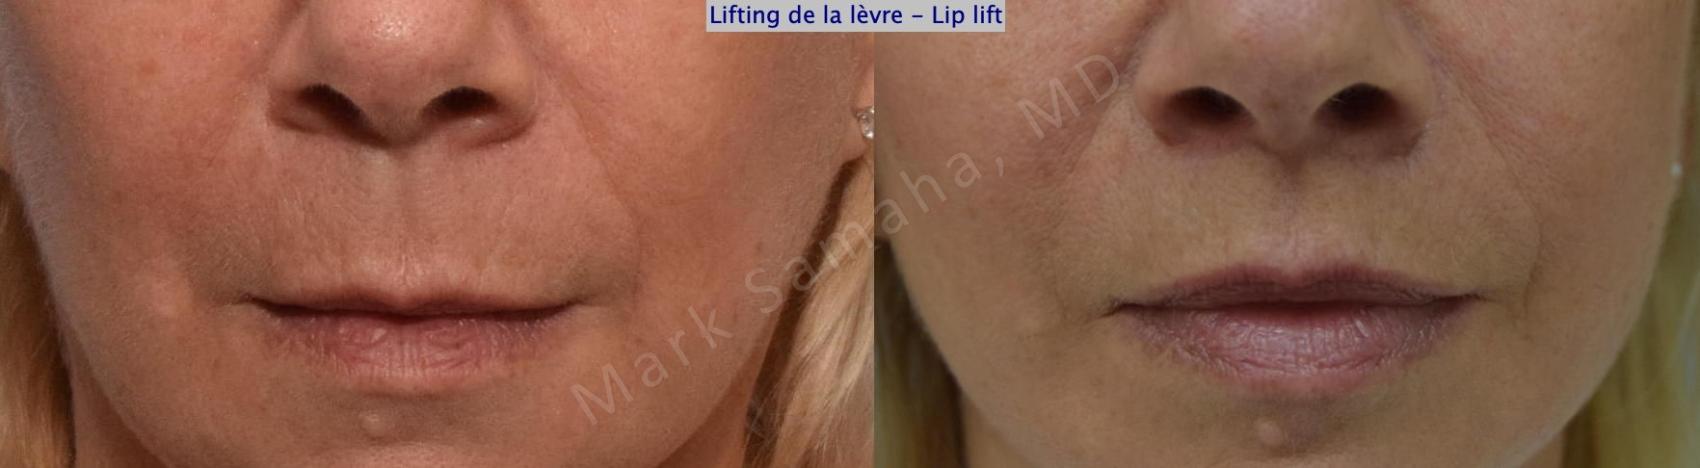 Before & After Lifting de la lèvre supérieure / Lip Lift Case 169 Front View in Montreal, QC